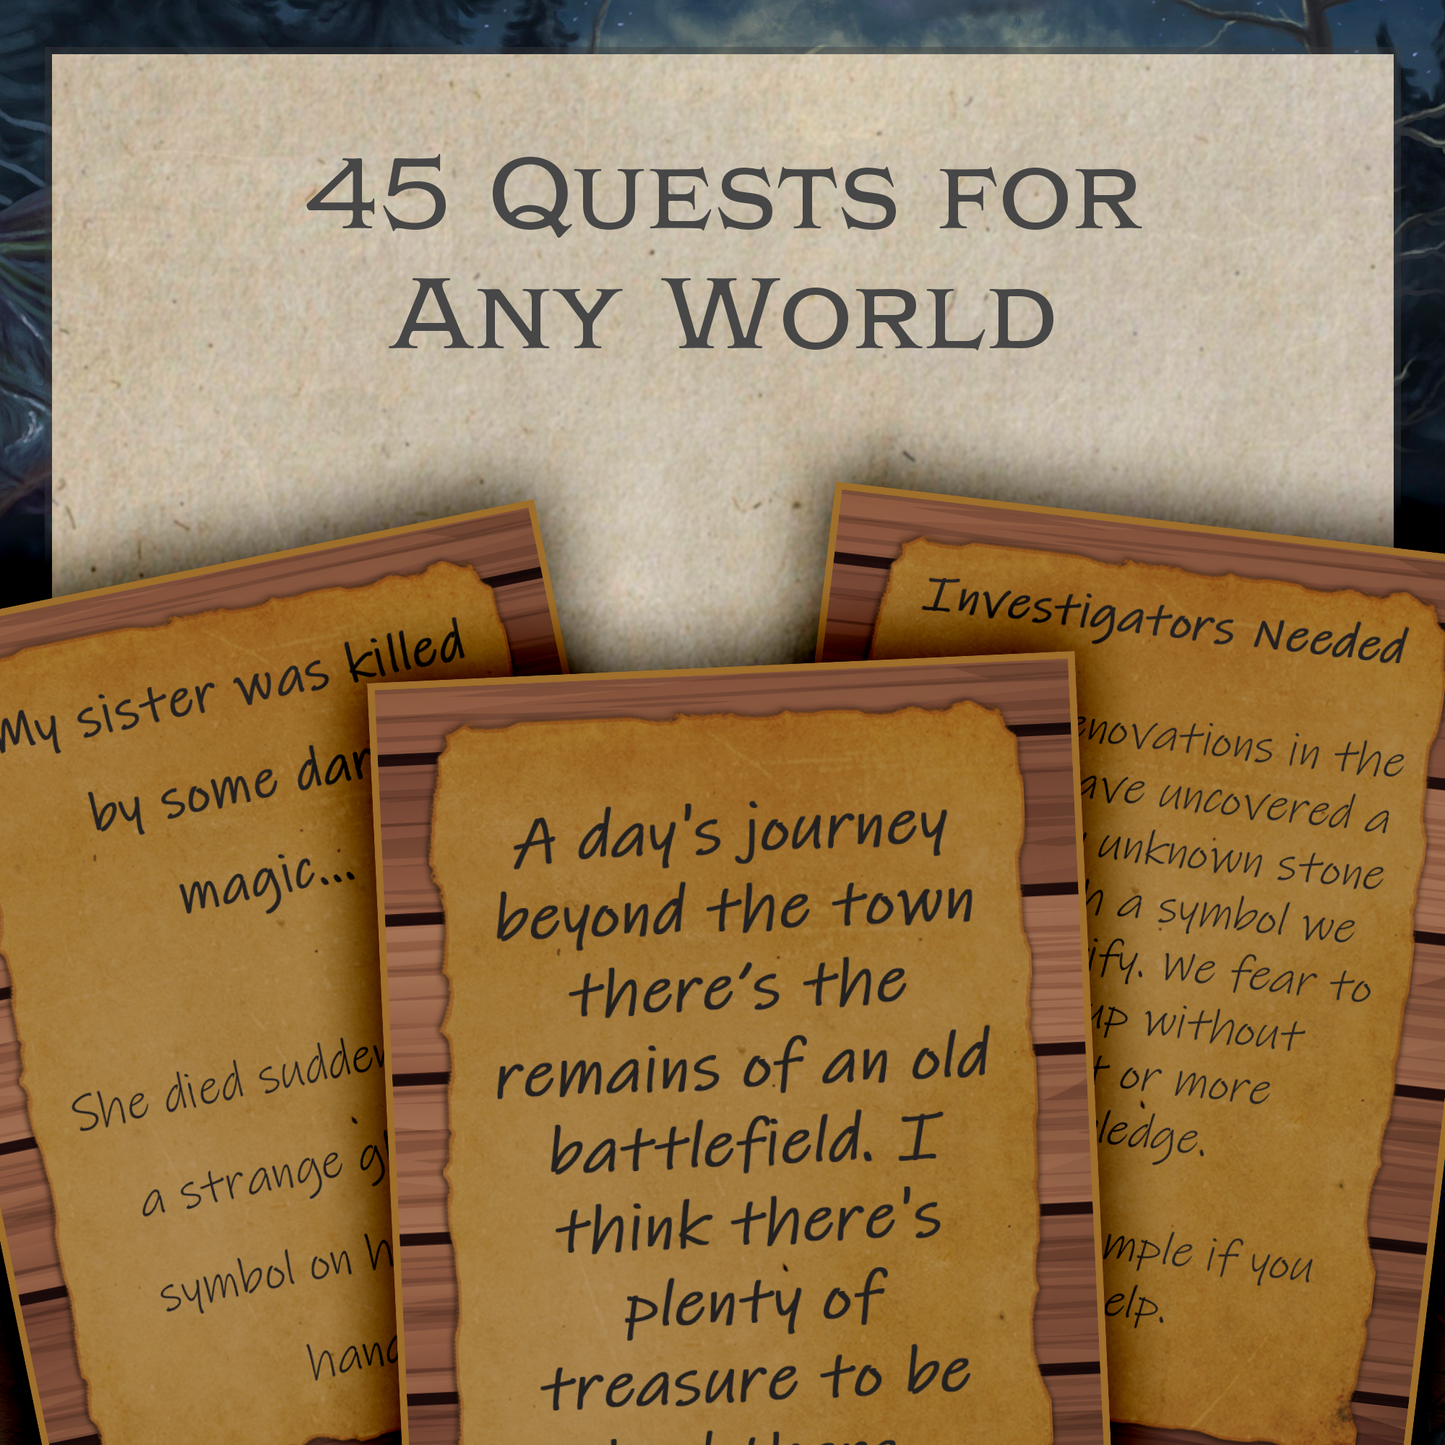 Quest Decks: The Notice Board